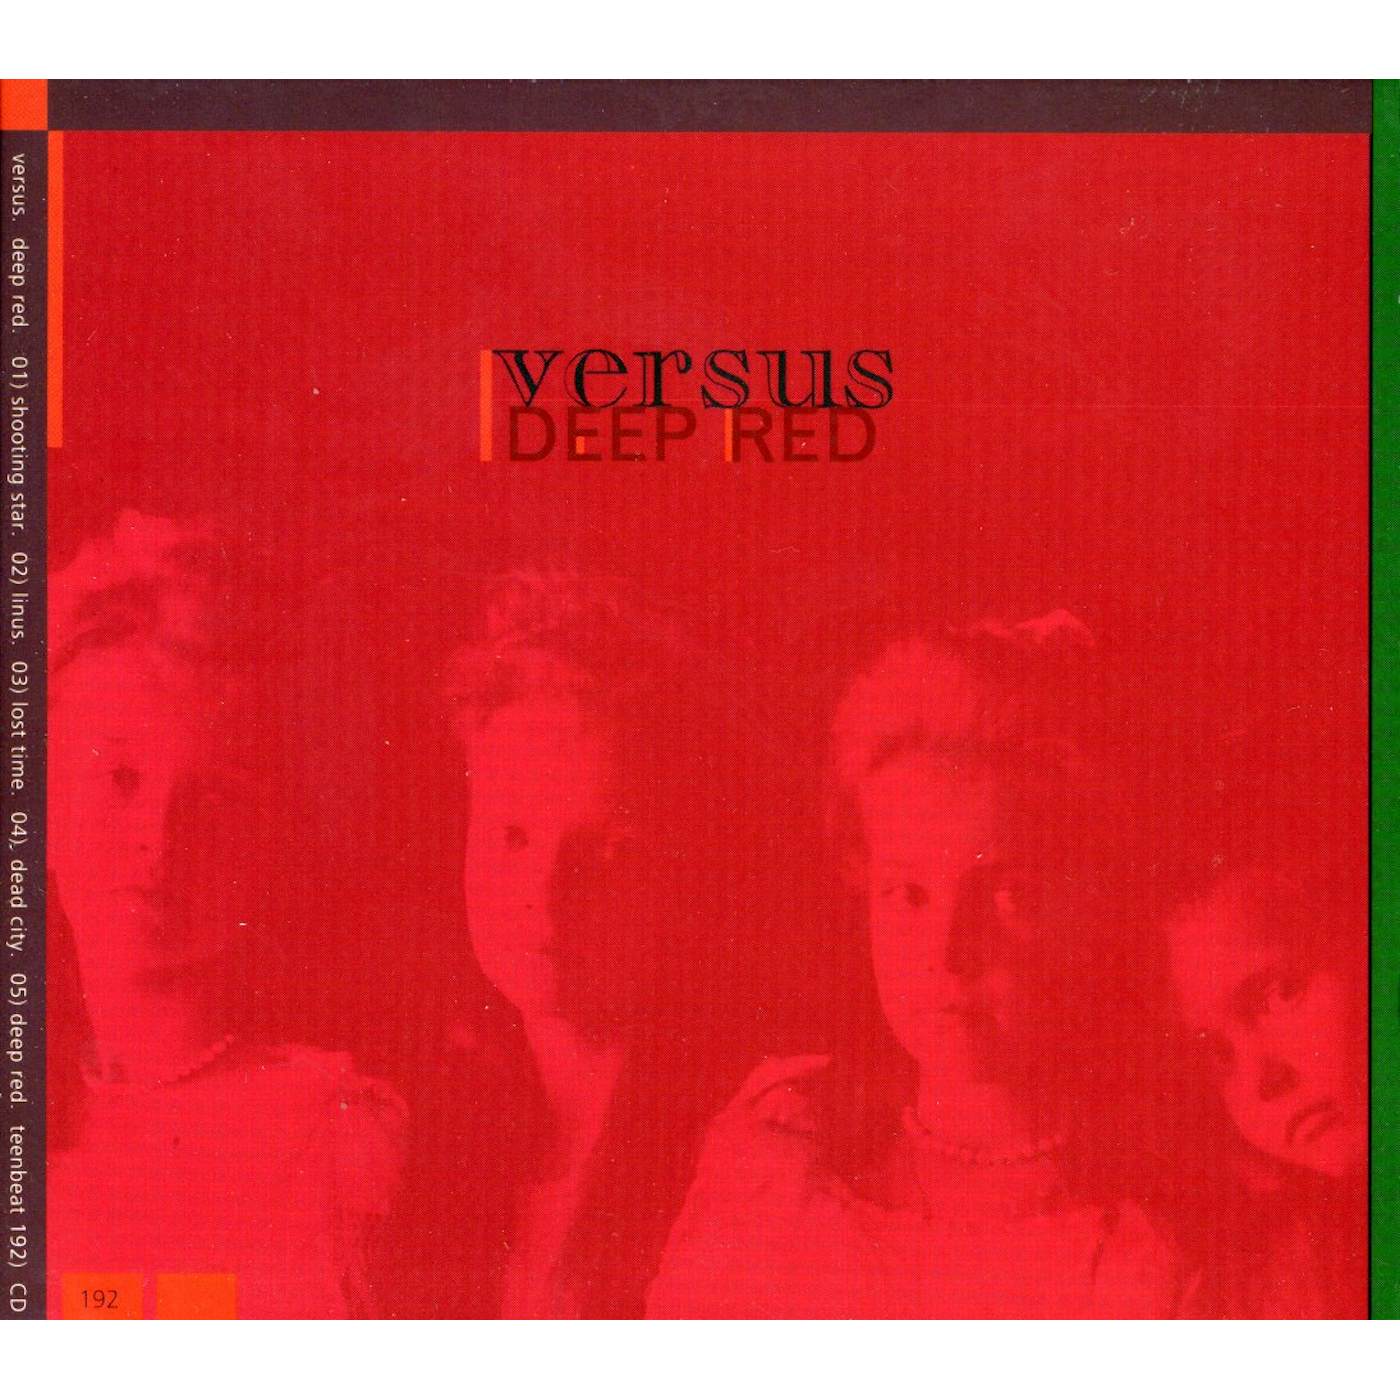 Versus DEEP RED CD